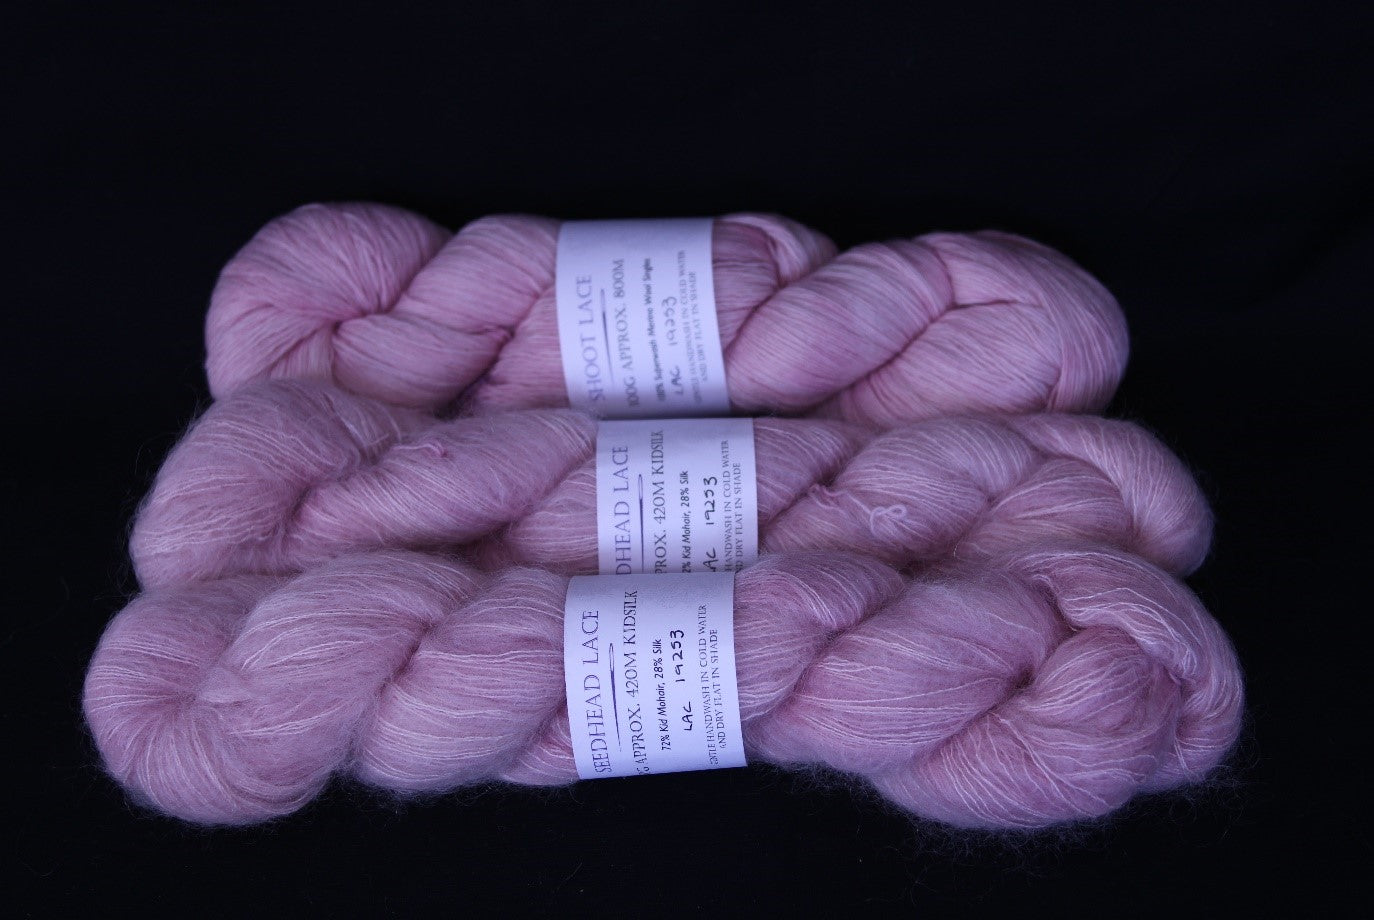 Trellis shawl kit lace weight yarn